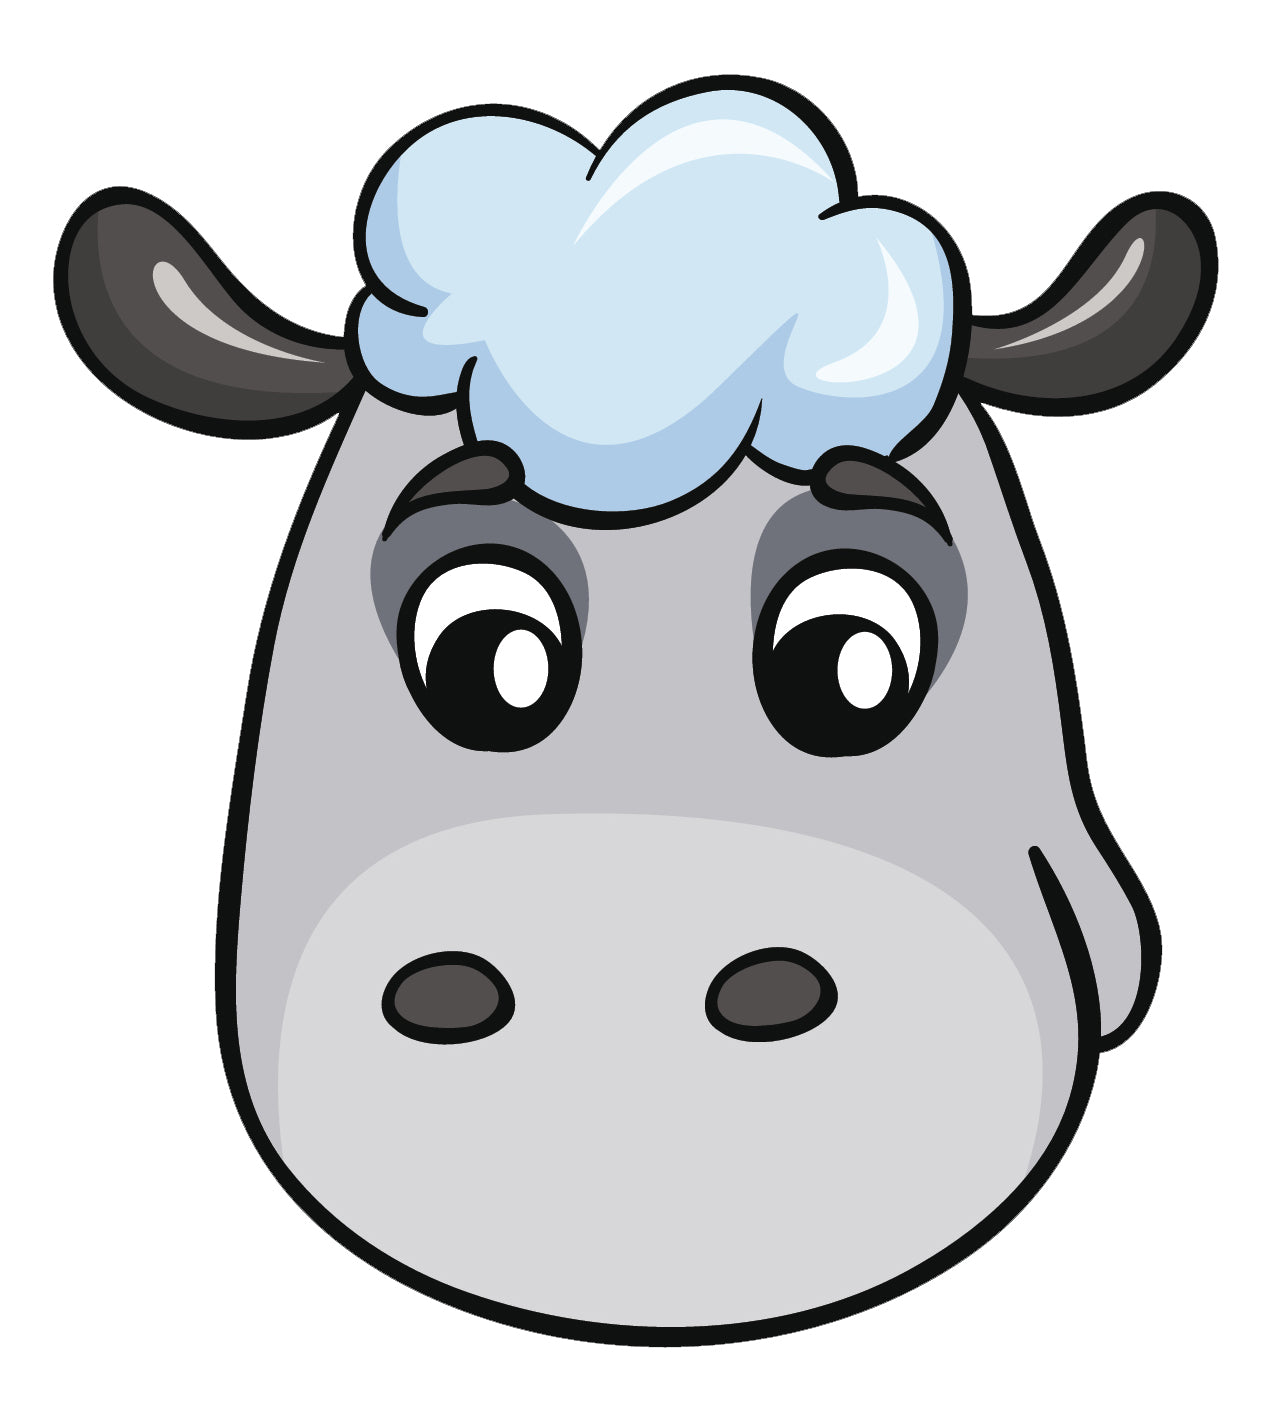 Happy Farm Animal Cartoon Emoji - Sheep Vinyl Decal Sticker